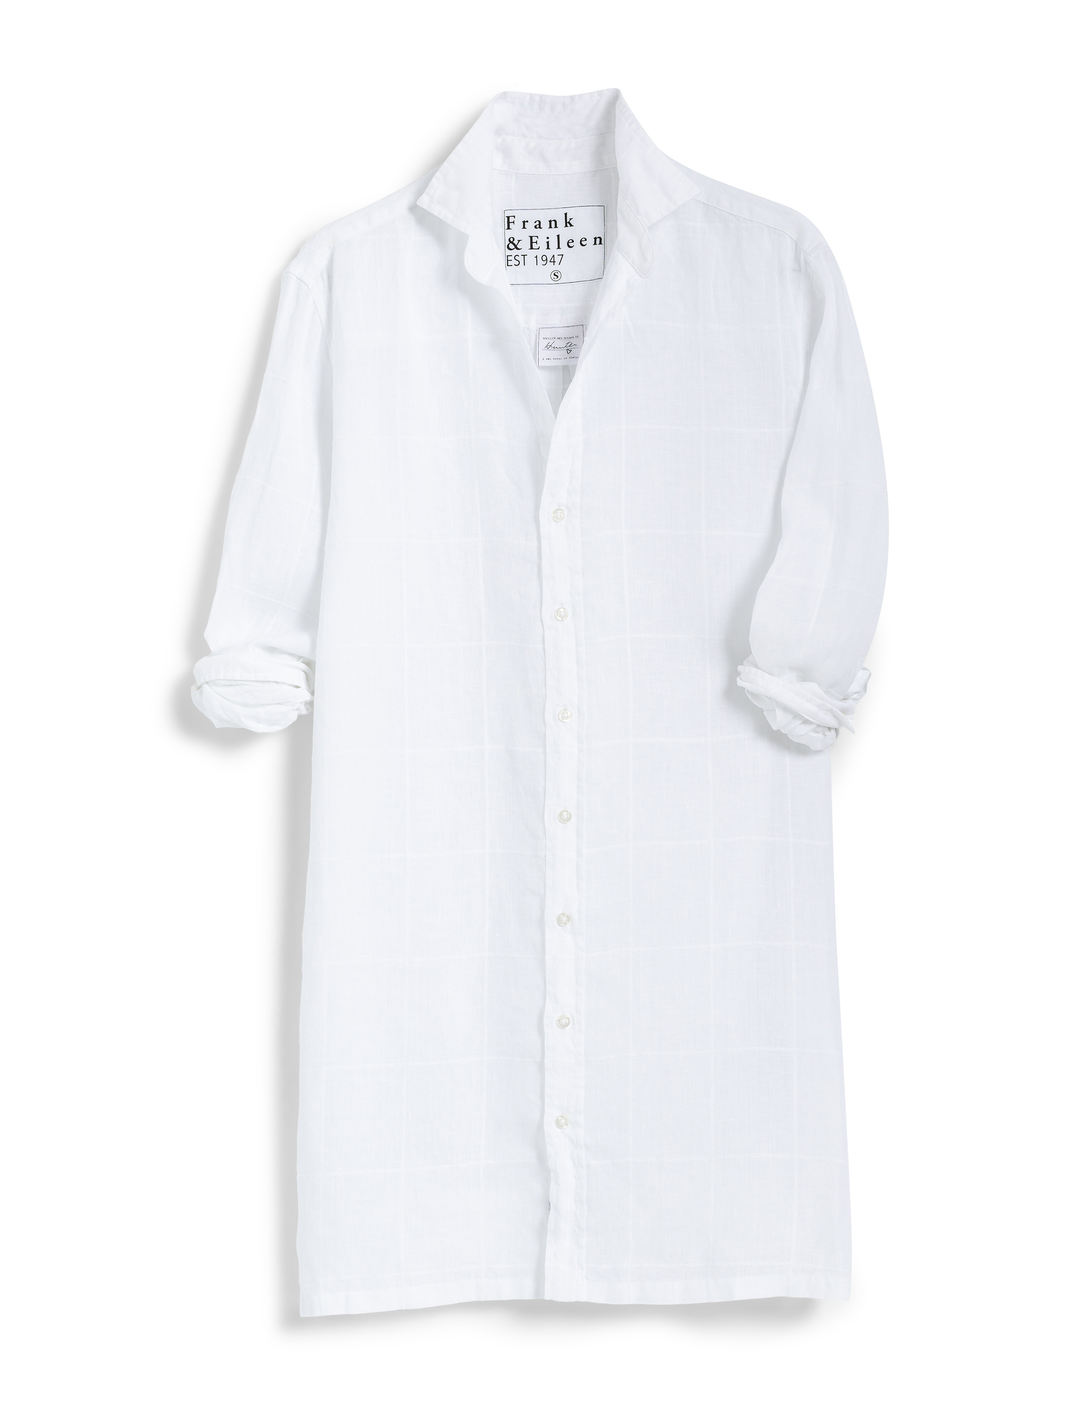 Frank & Eileen - Hunter Woven Button Up Dress in White Textured Windowpane